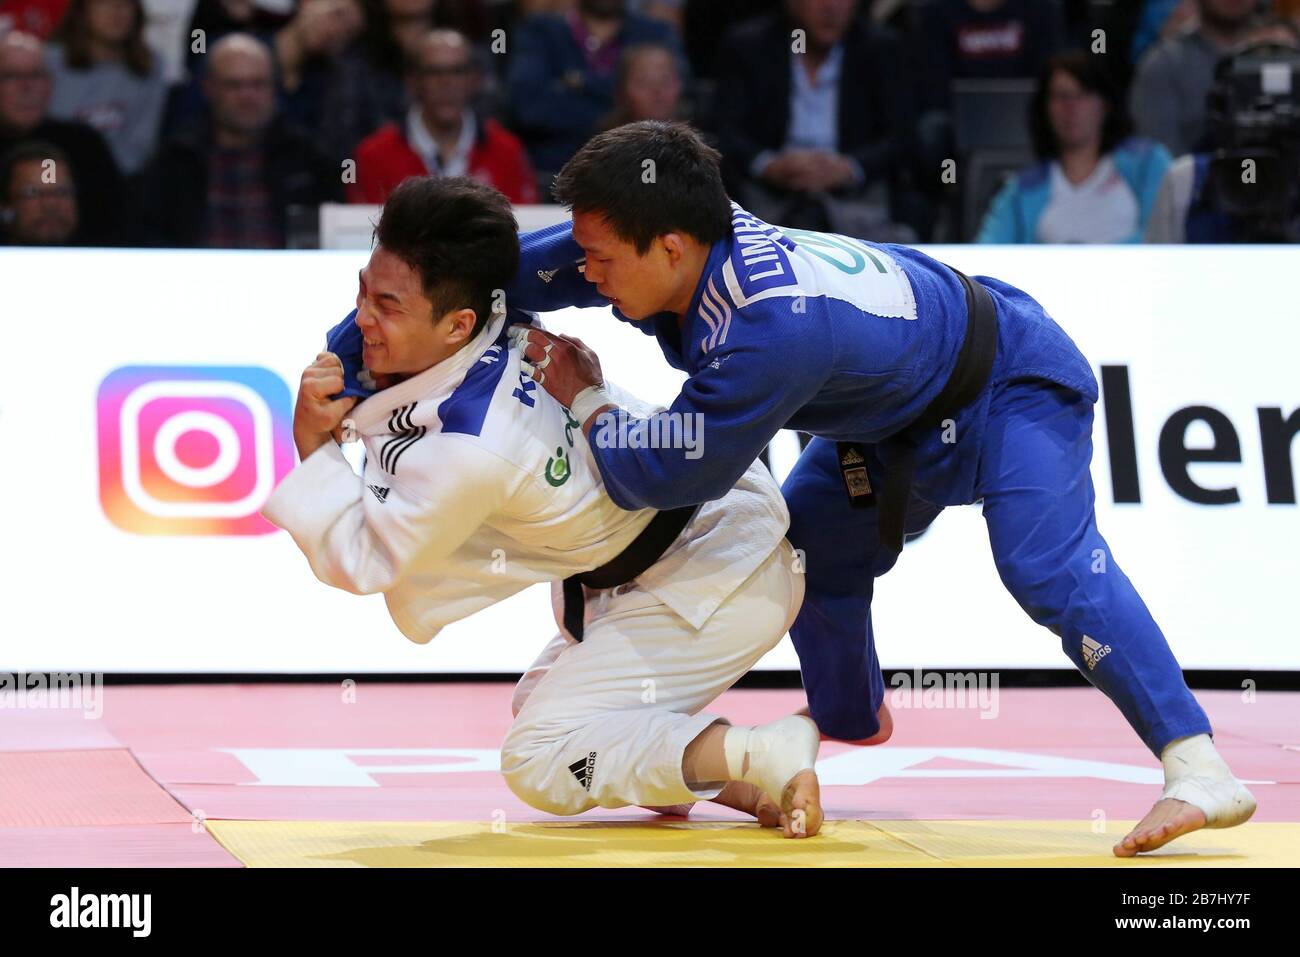 Paris, France - 08th Feb, 2020: Baul An for Korea (white) against Limhwan Kim for Korea (blue), Men's -66 kg, Gold Medal Match (Credit: Mickael Chavet) Stock Photo